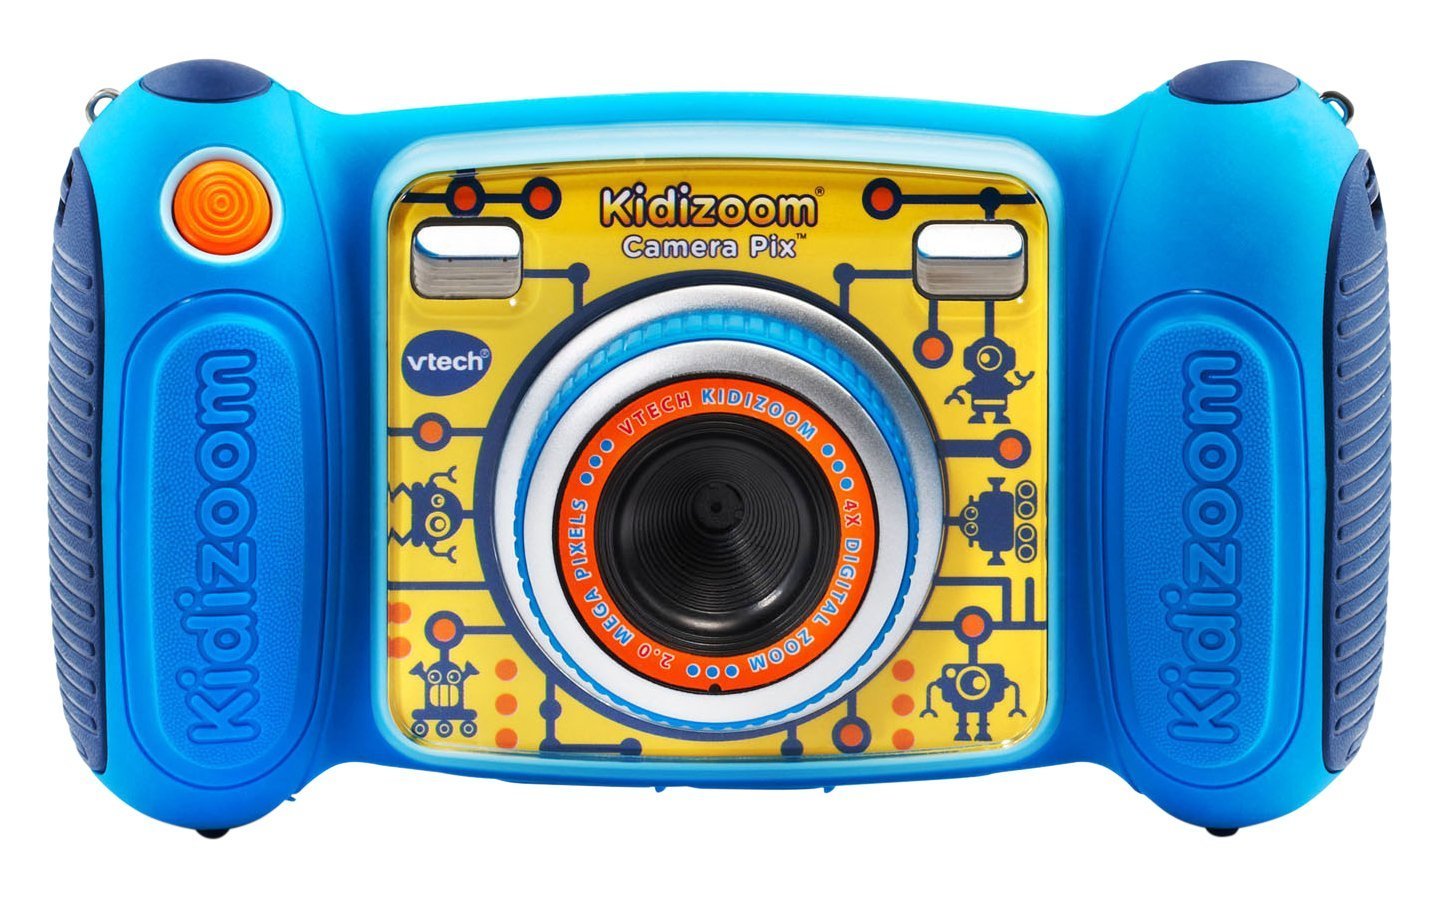 VTech Kidizoom Camera Pix – Just $29.88!